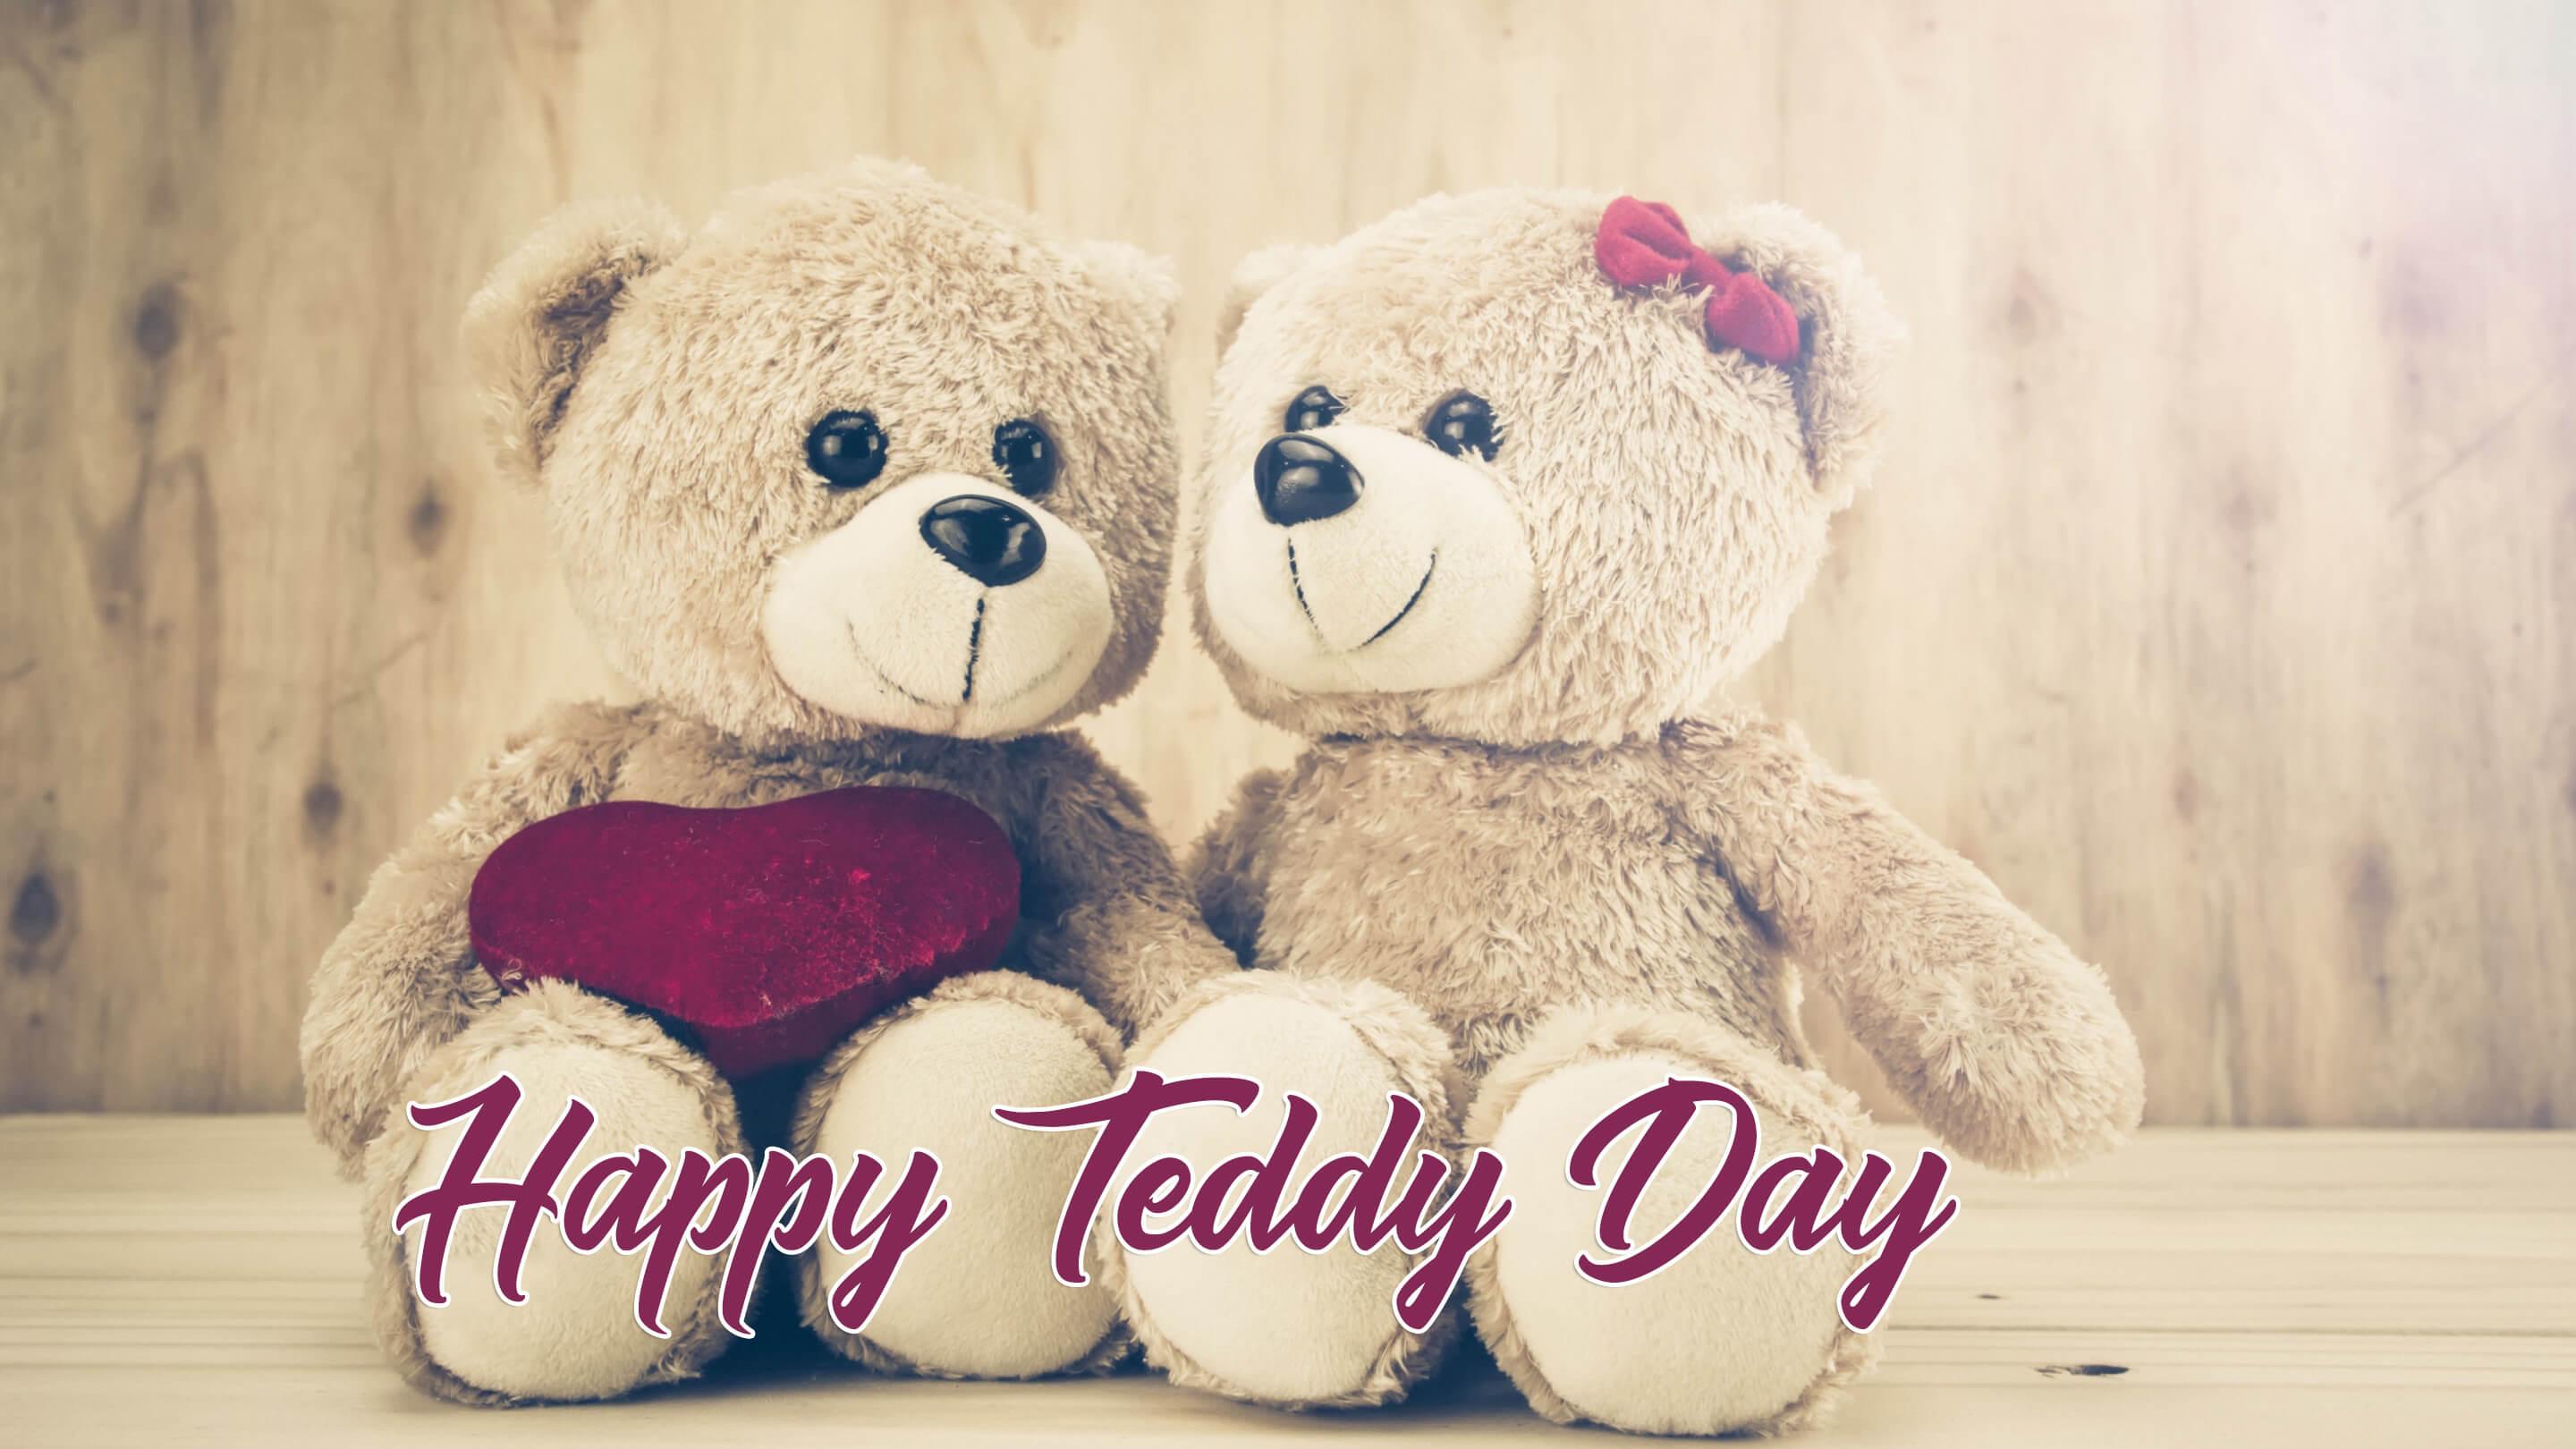 Teddy Day wallpaper